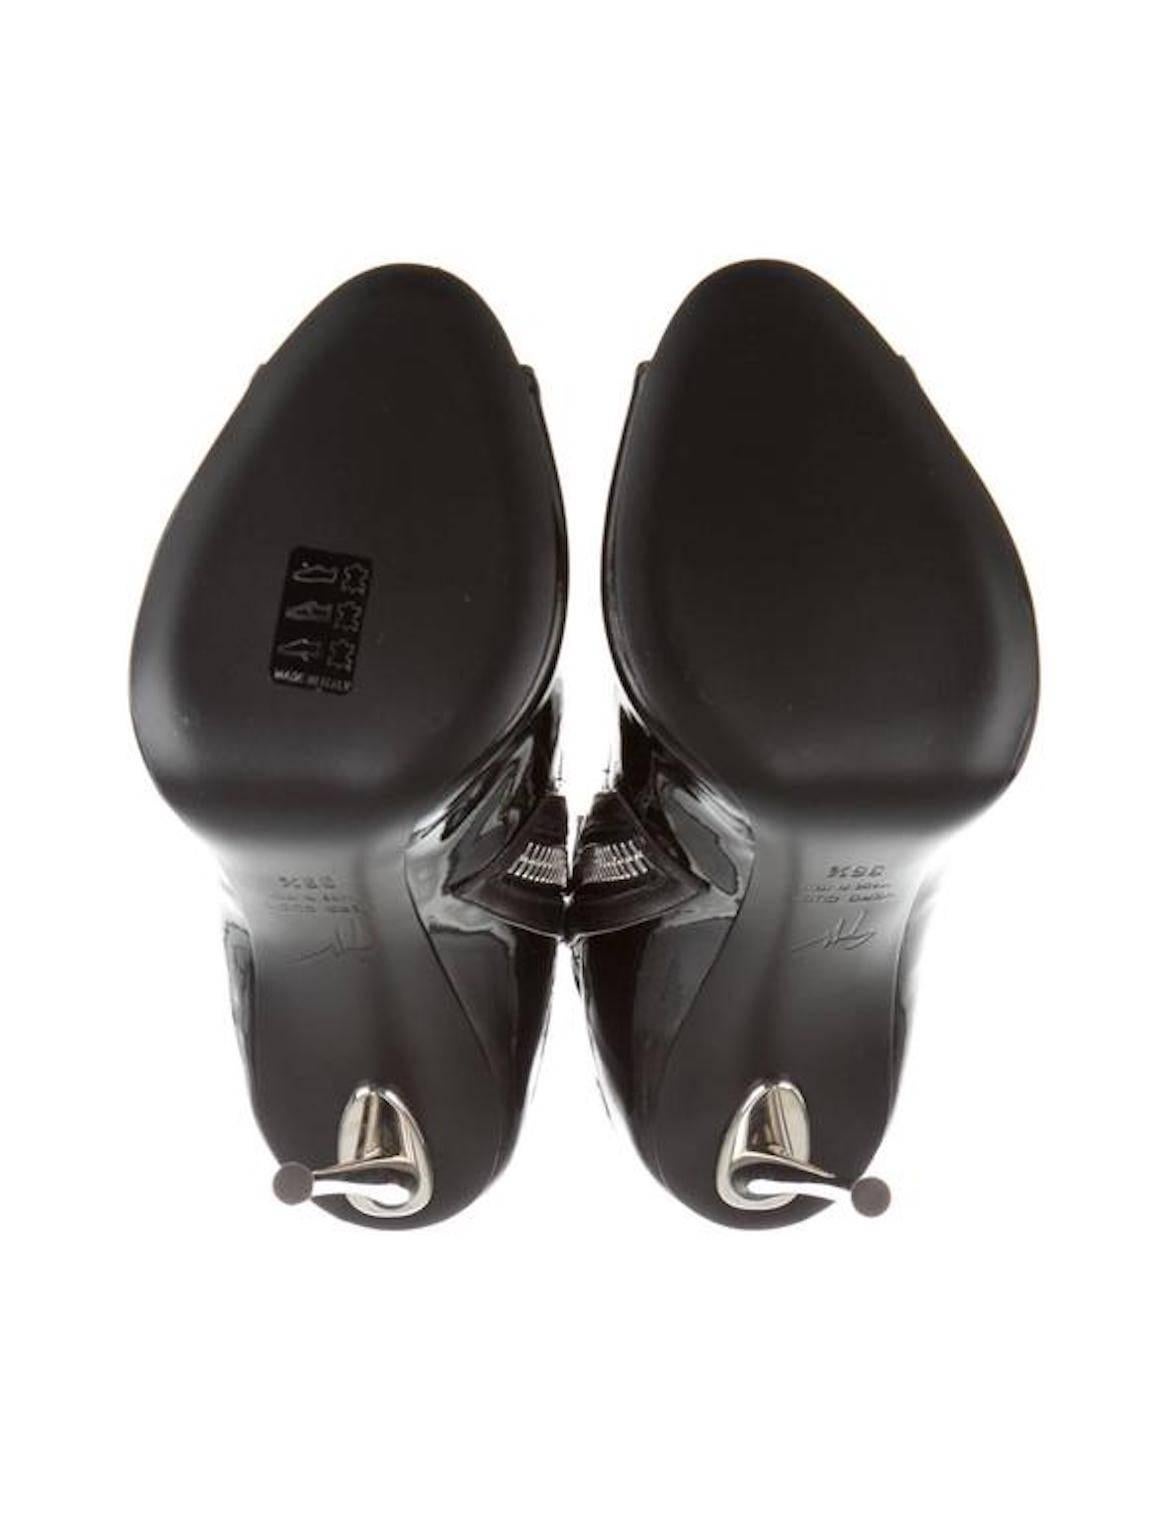 Giuseppe Zanotti New Black Patent Metal Heels Ankle Booties in Box 1